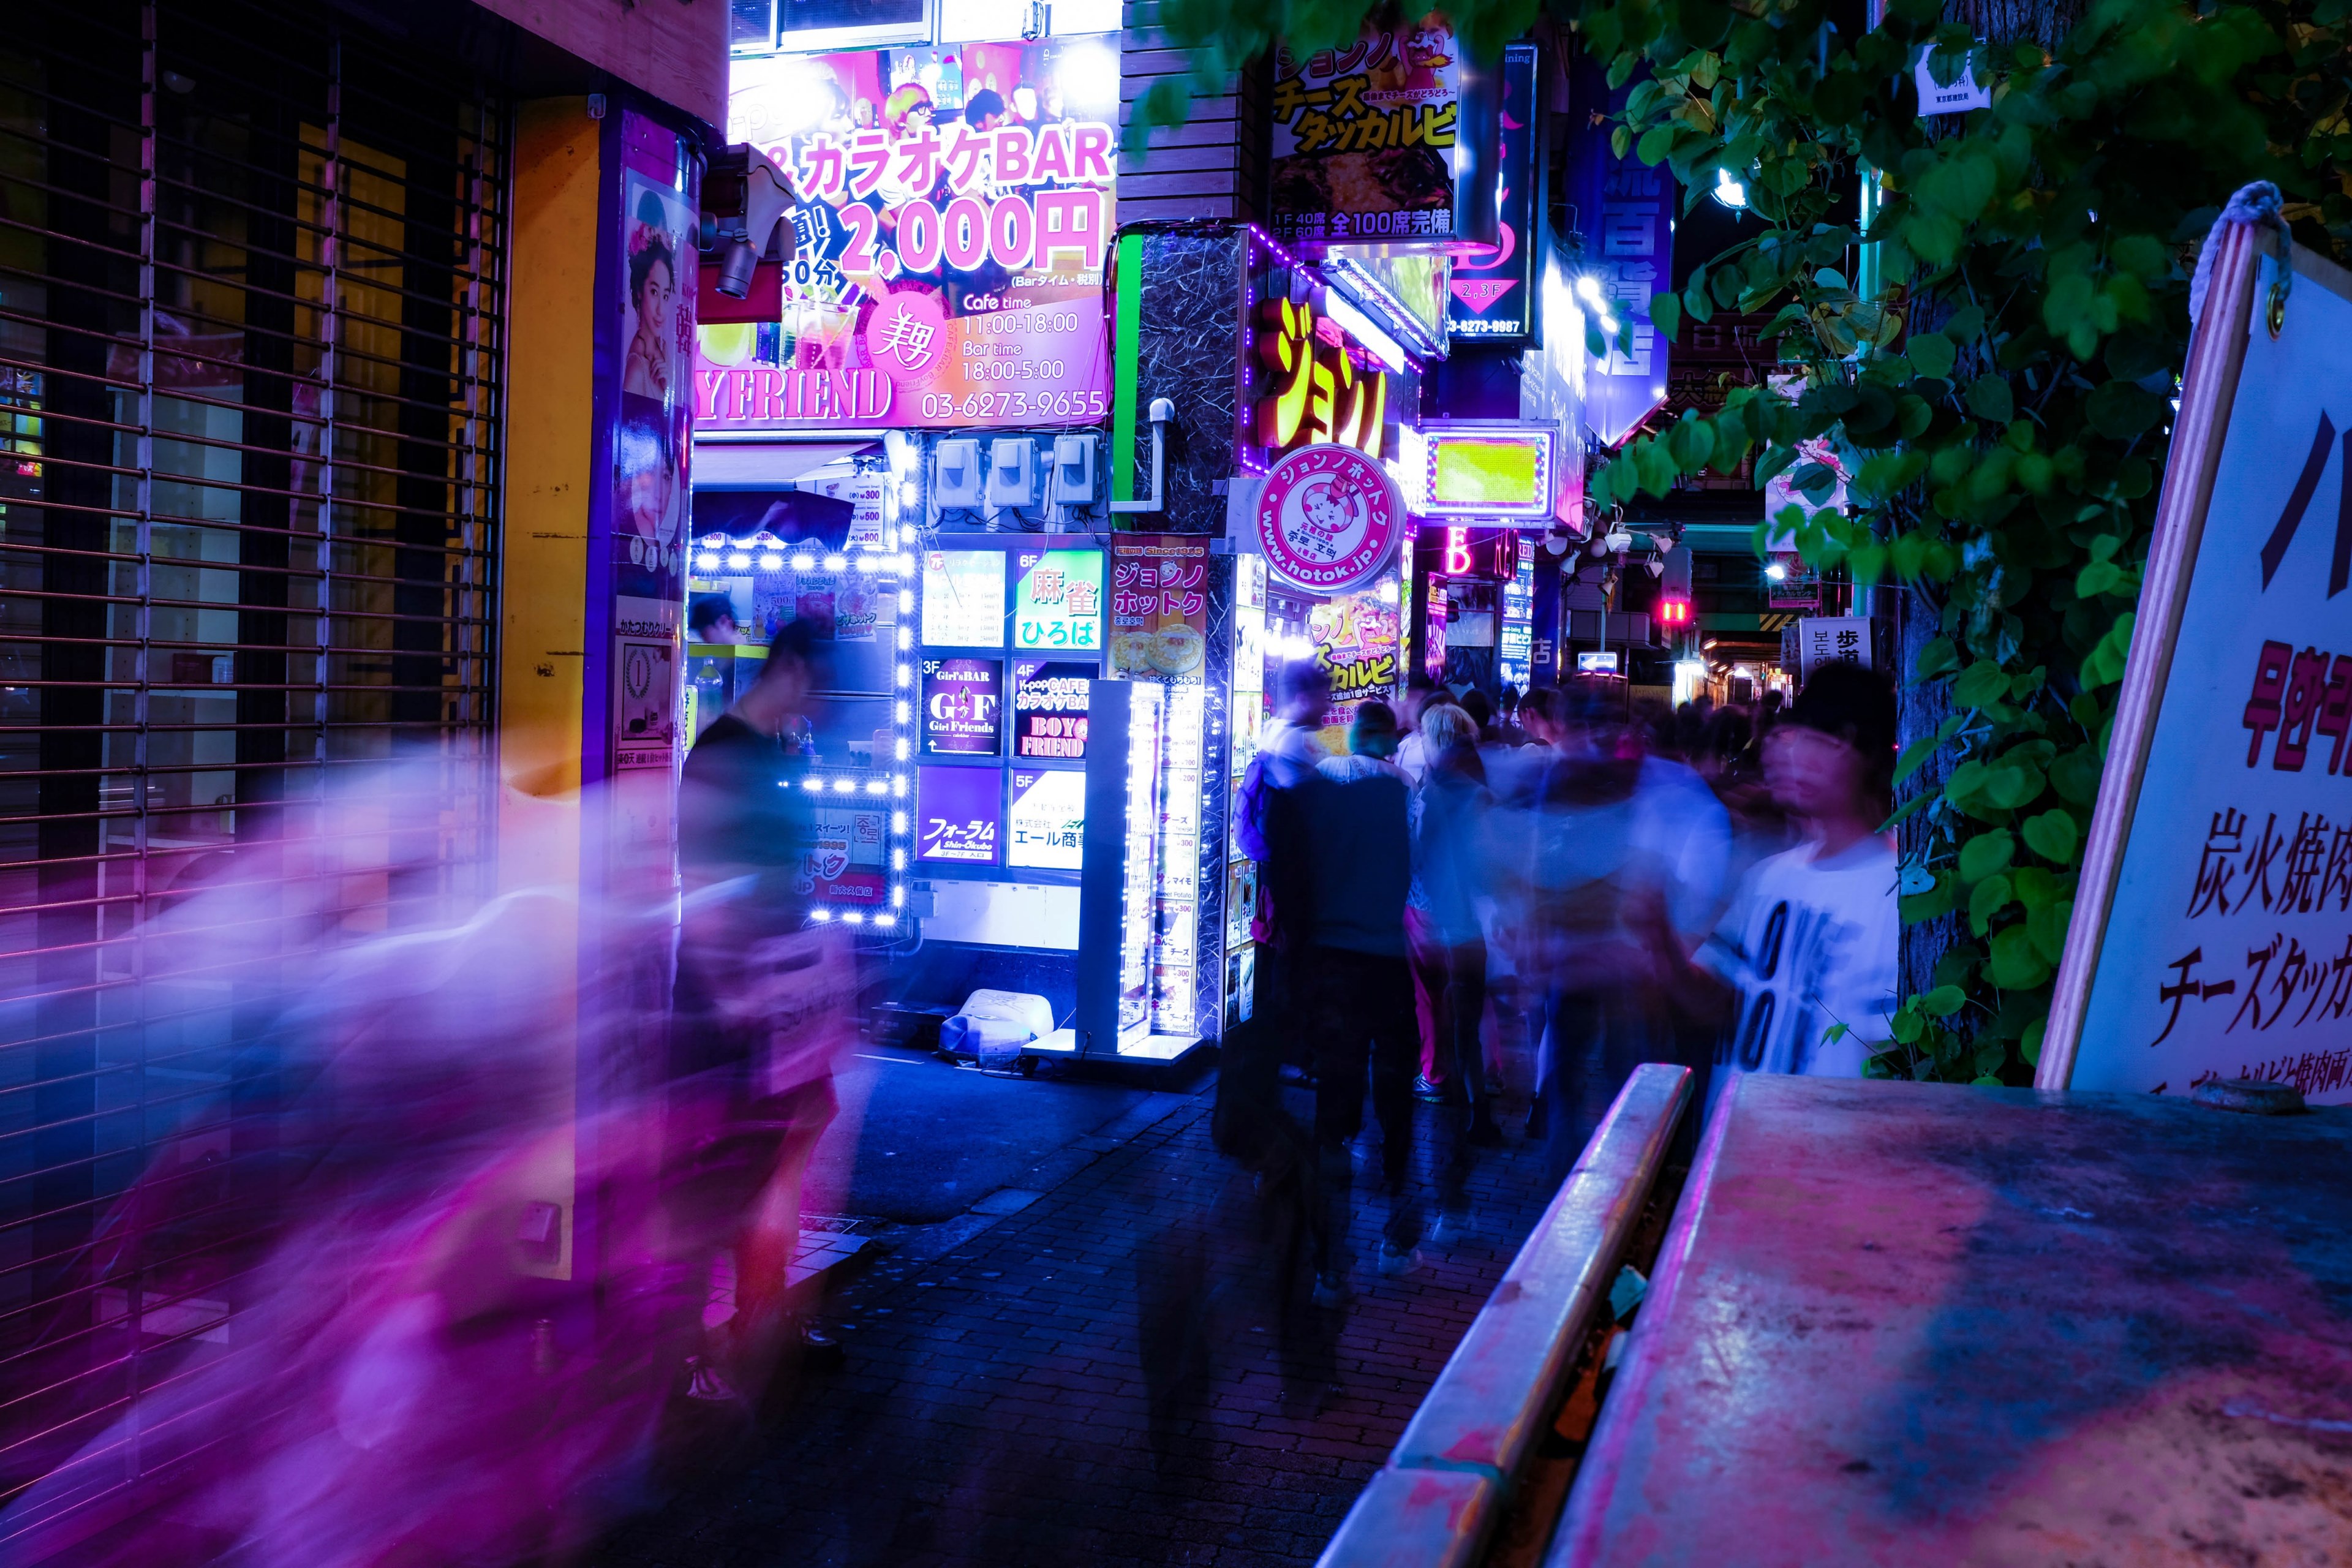 Wallpaper id long exposure of people walking in a city near bright shop signs neon lights in shin okubo tokyo japan k wallpaper free download